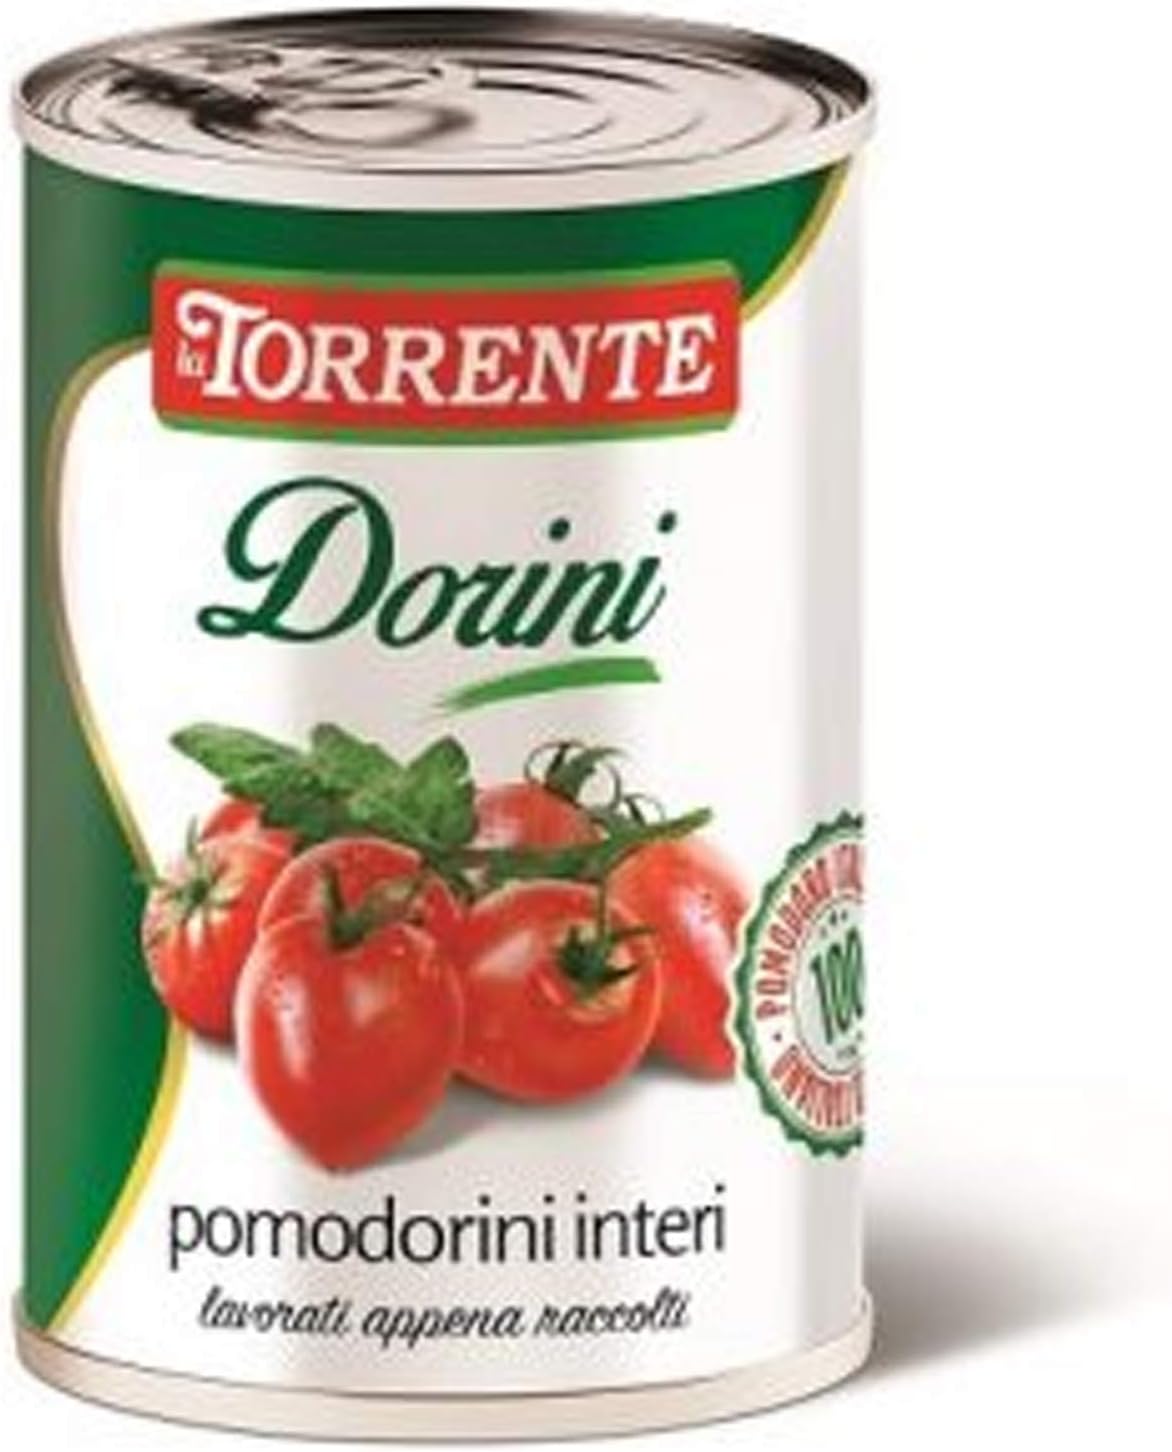 24 Barattoli Pomodorini Interi La Torrente Dorini Lattina Pomodori da 500gr.